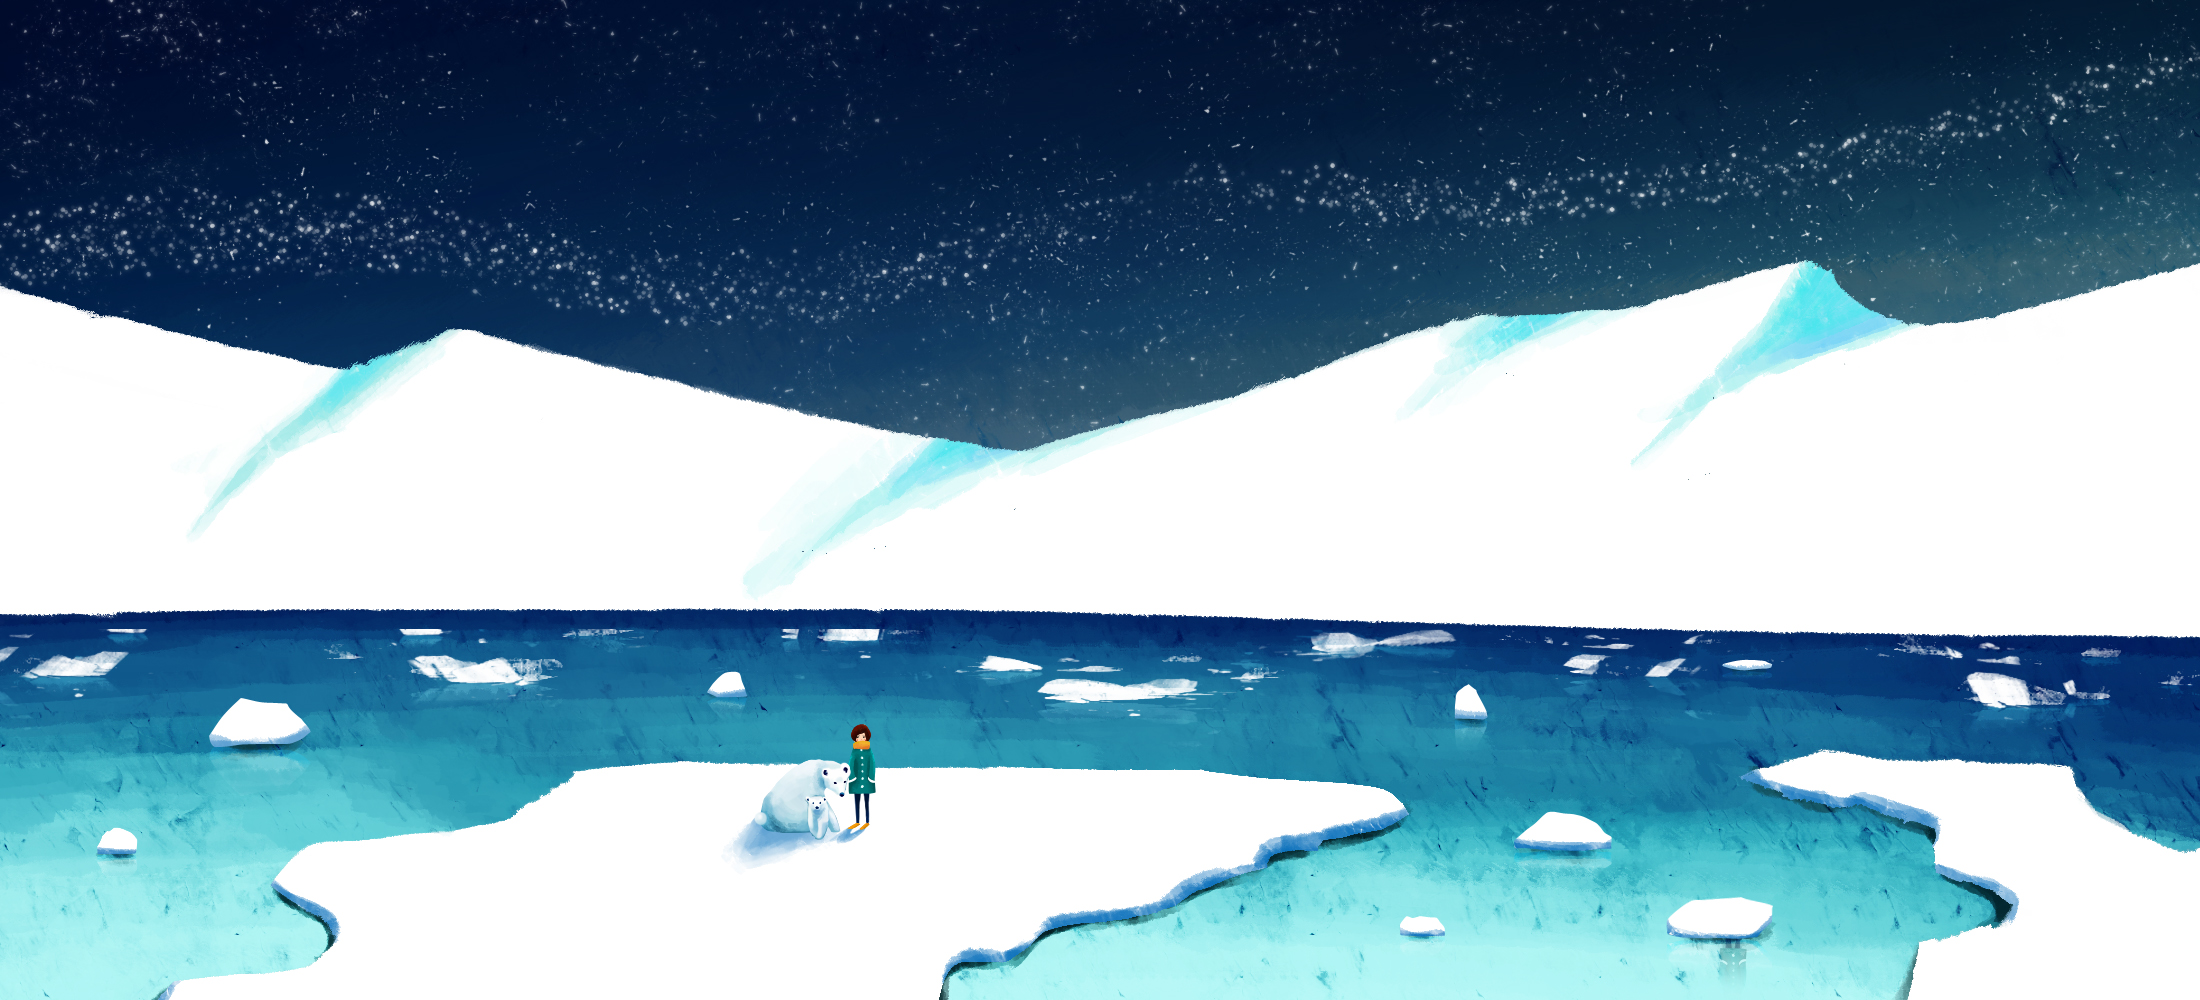 inside the glacier|插画|商业插画|cecii - 原创作品